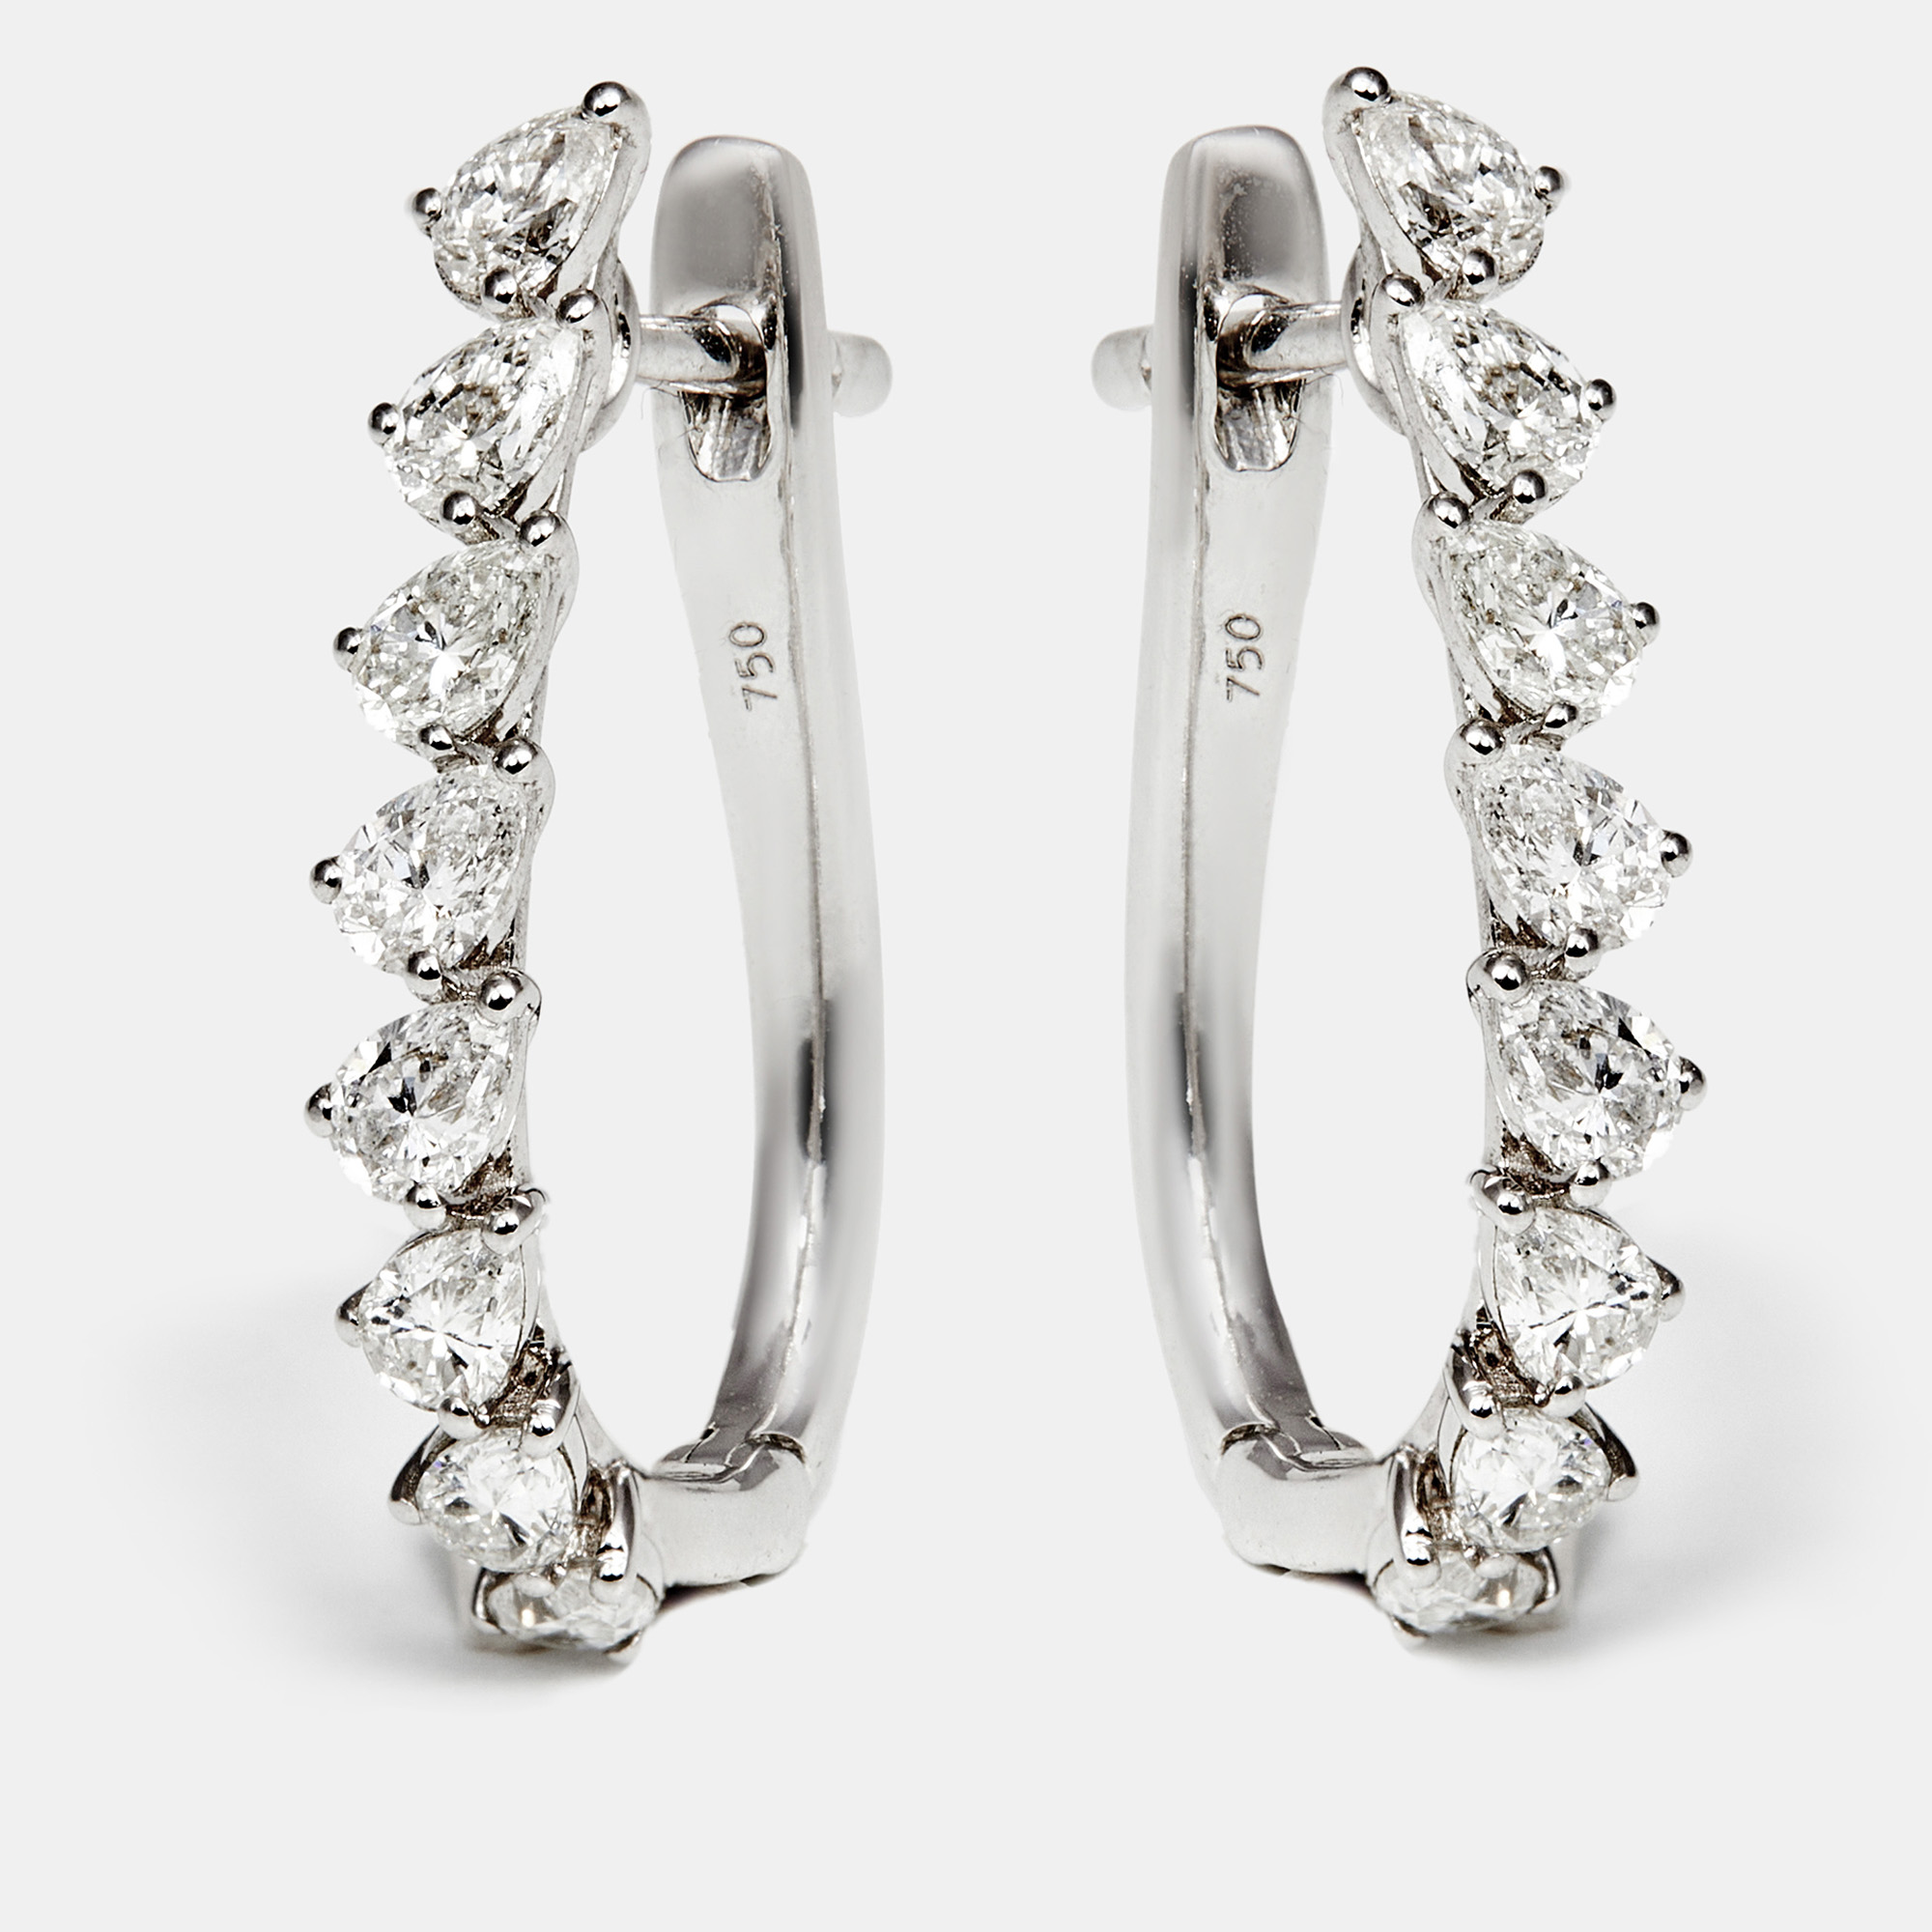 The diamond edit daily wear pear cut diamond 1.22 cts 18k white gold earrings